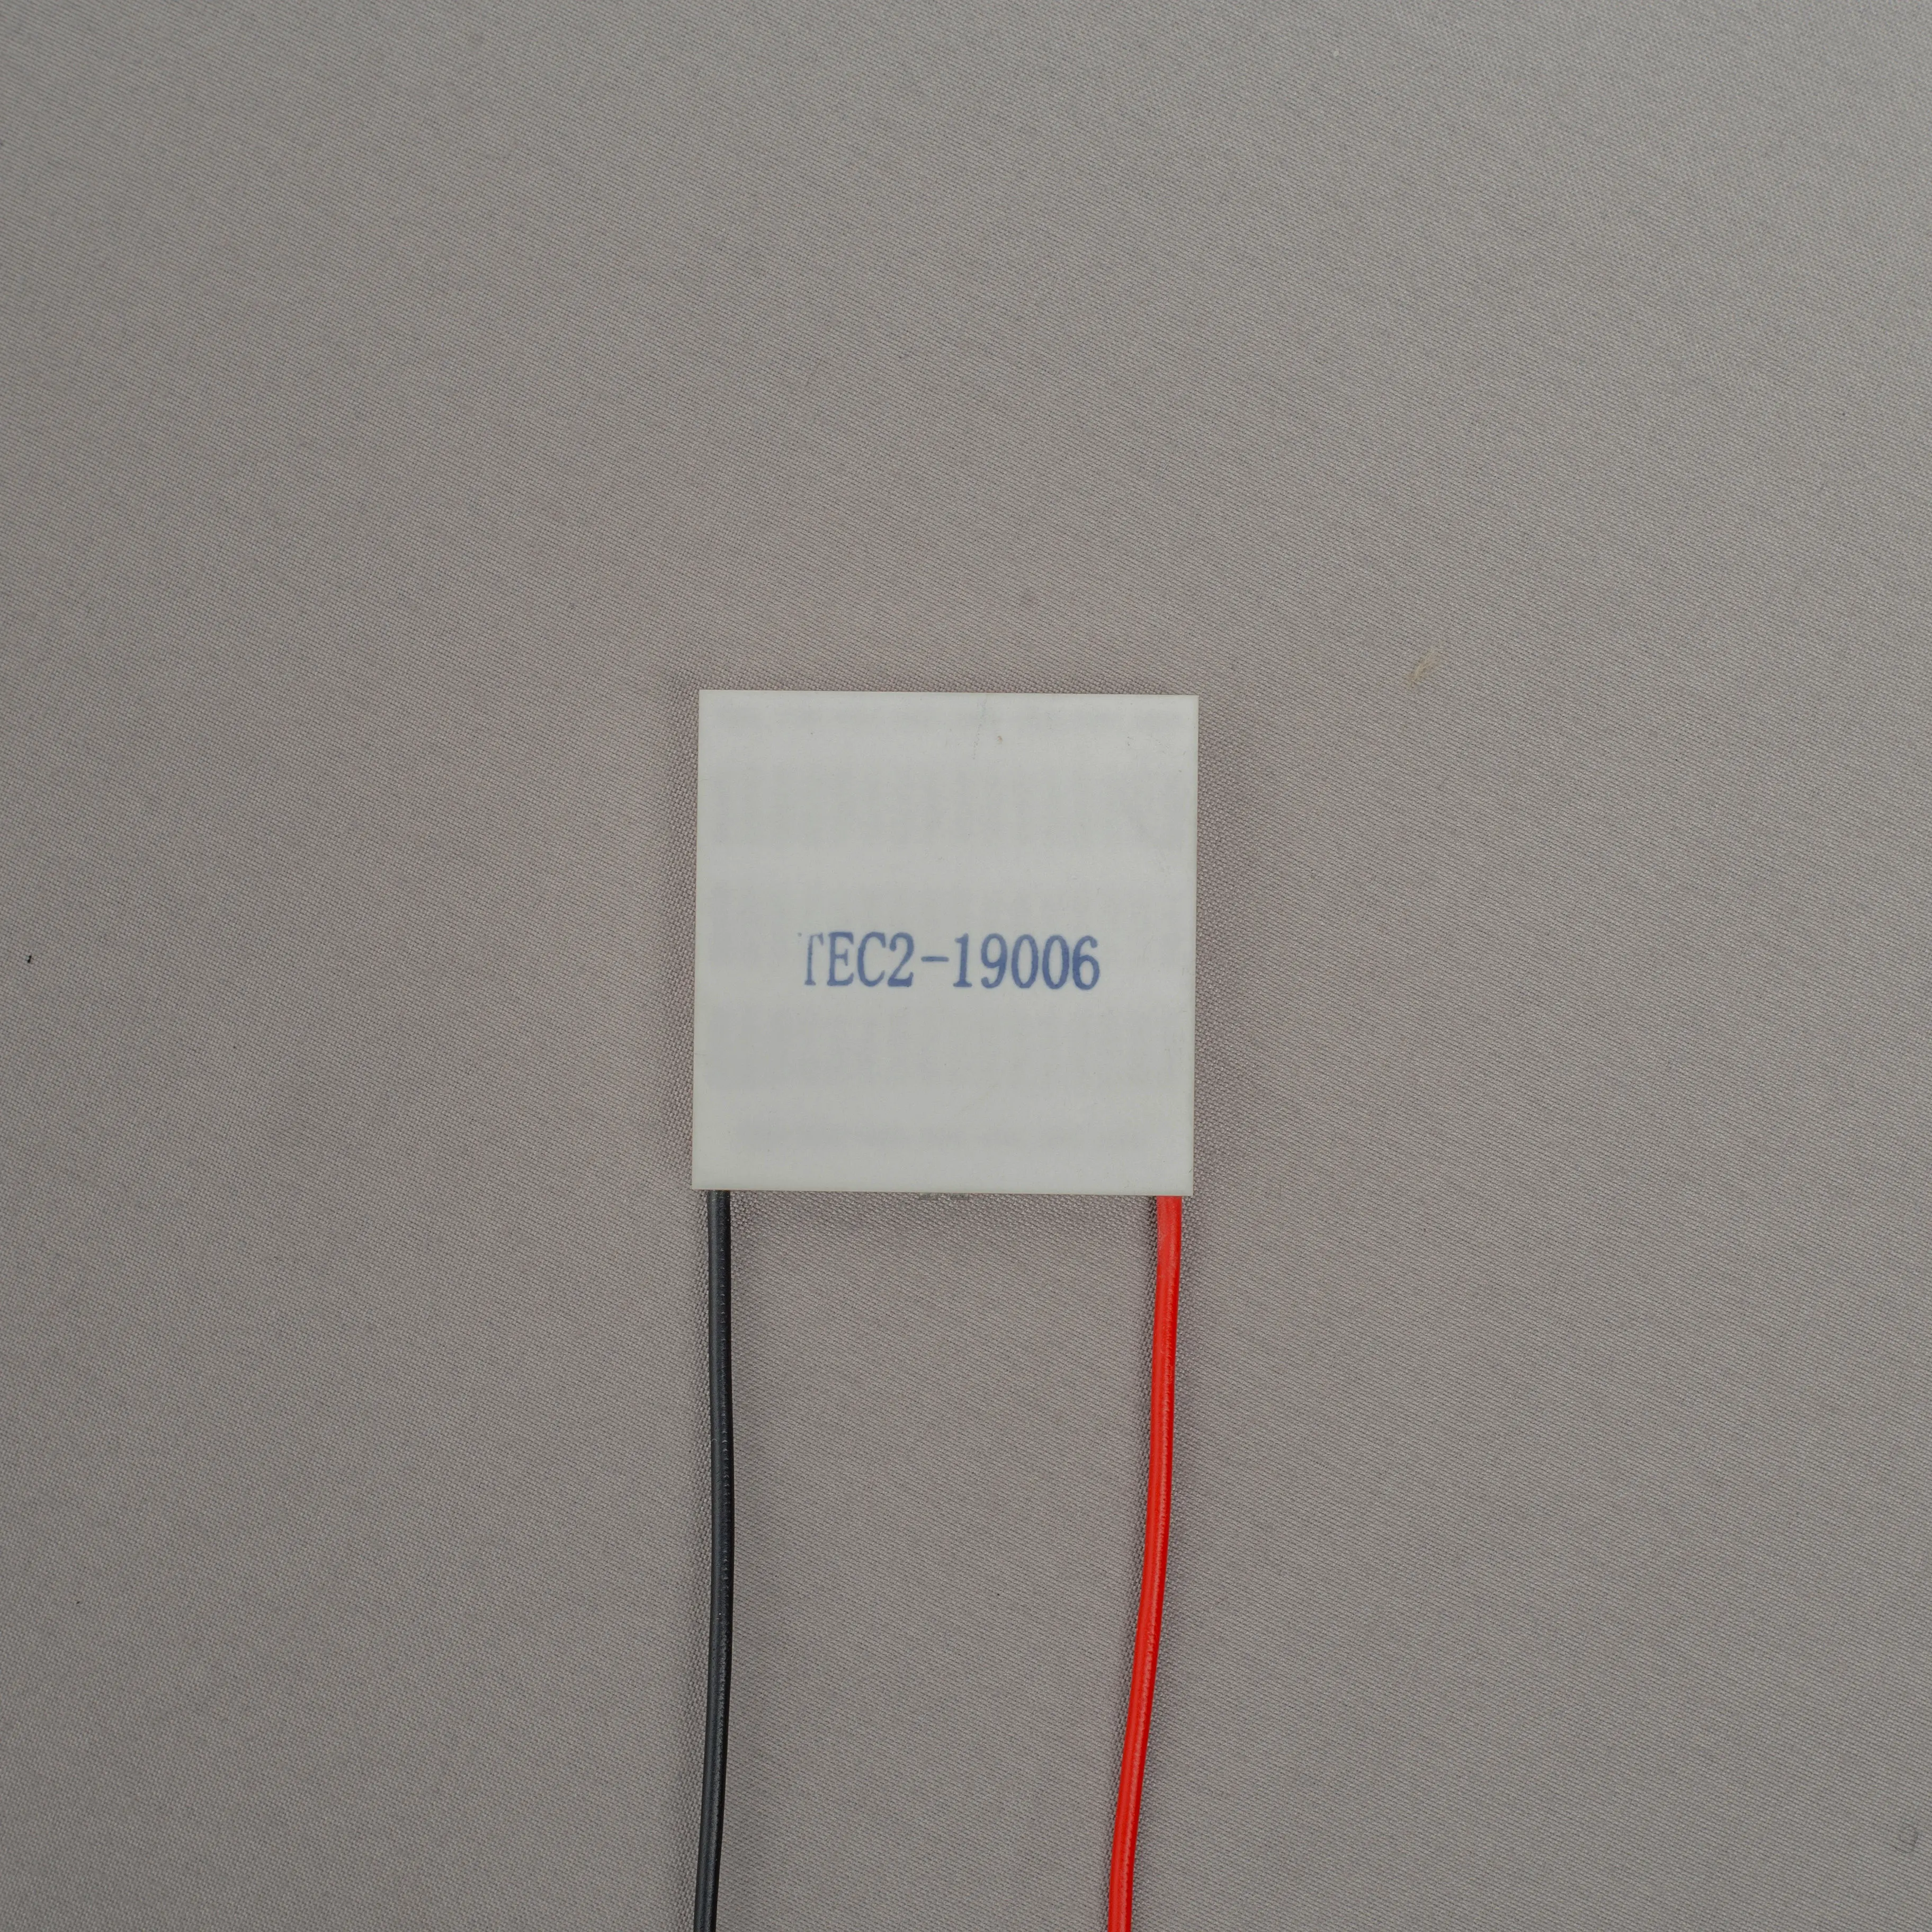 TEC2-19006 doppel stufen kühler peltier thermo elektrische coling modul